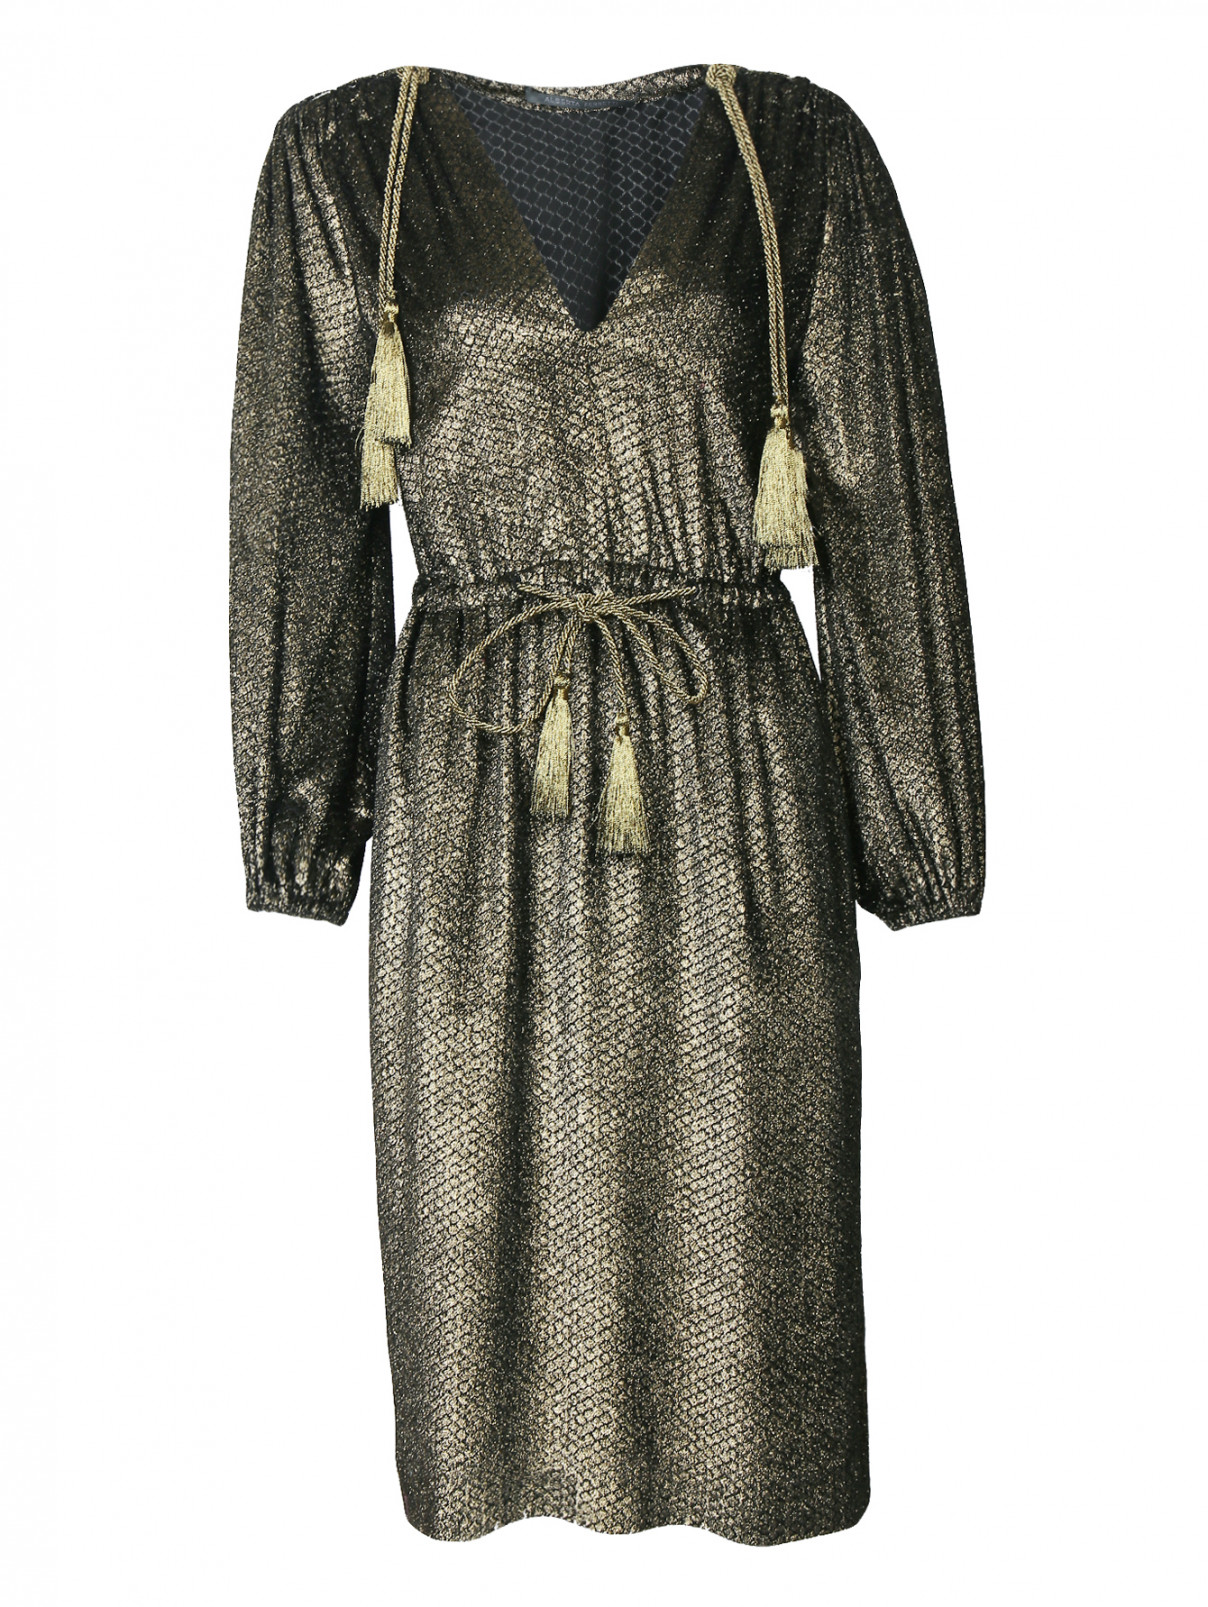 Платье-миди из бархата с открытыми плечами Alberta Ferretti  –  Общий вид  – Цвет:  Металлик